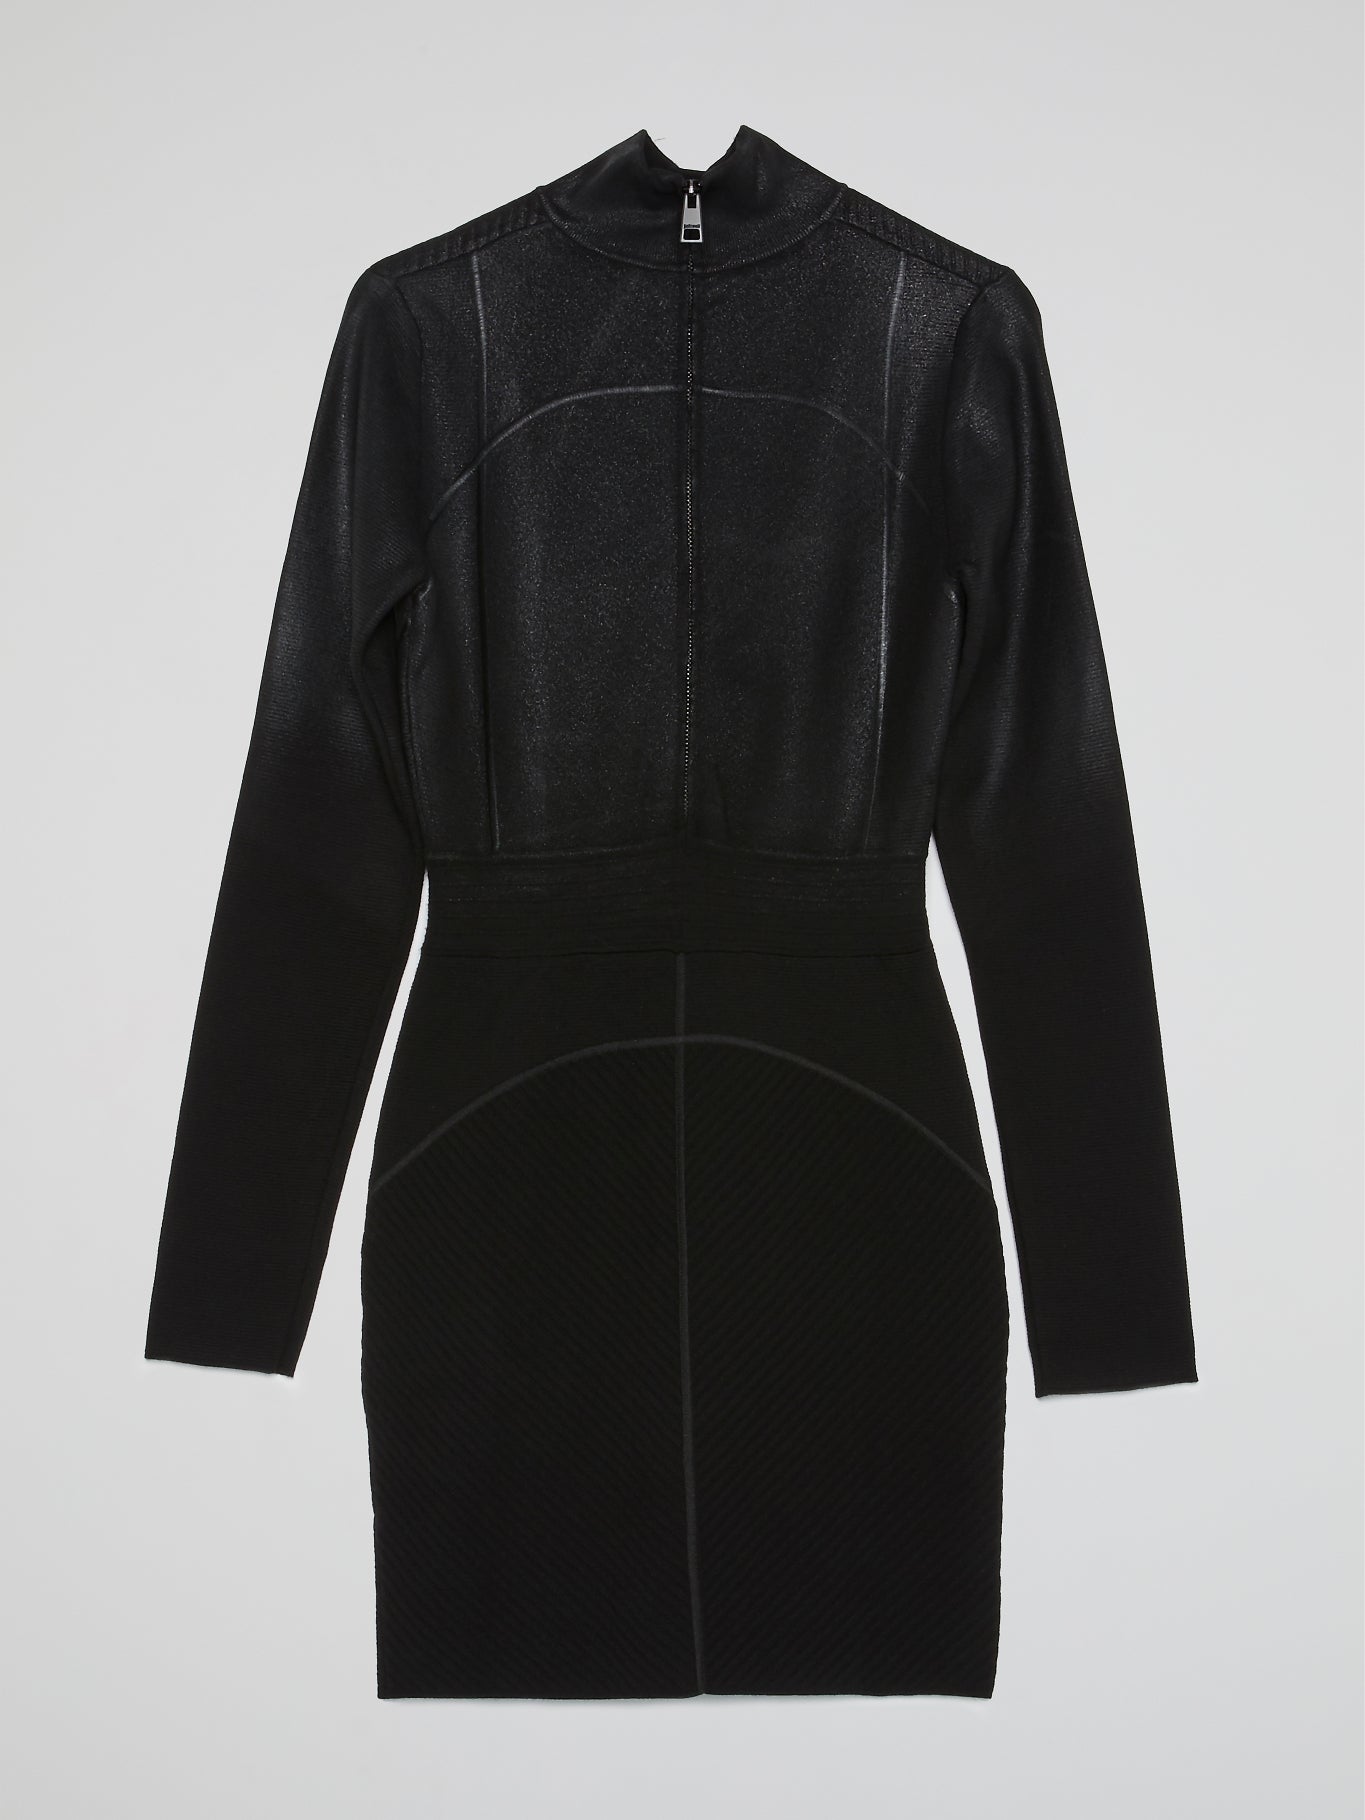 Black Long Sleeve Bodycon Dress